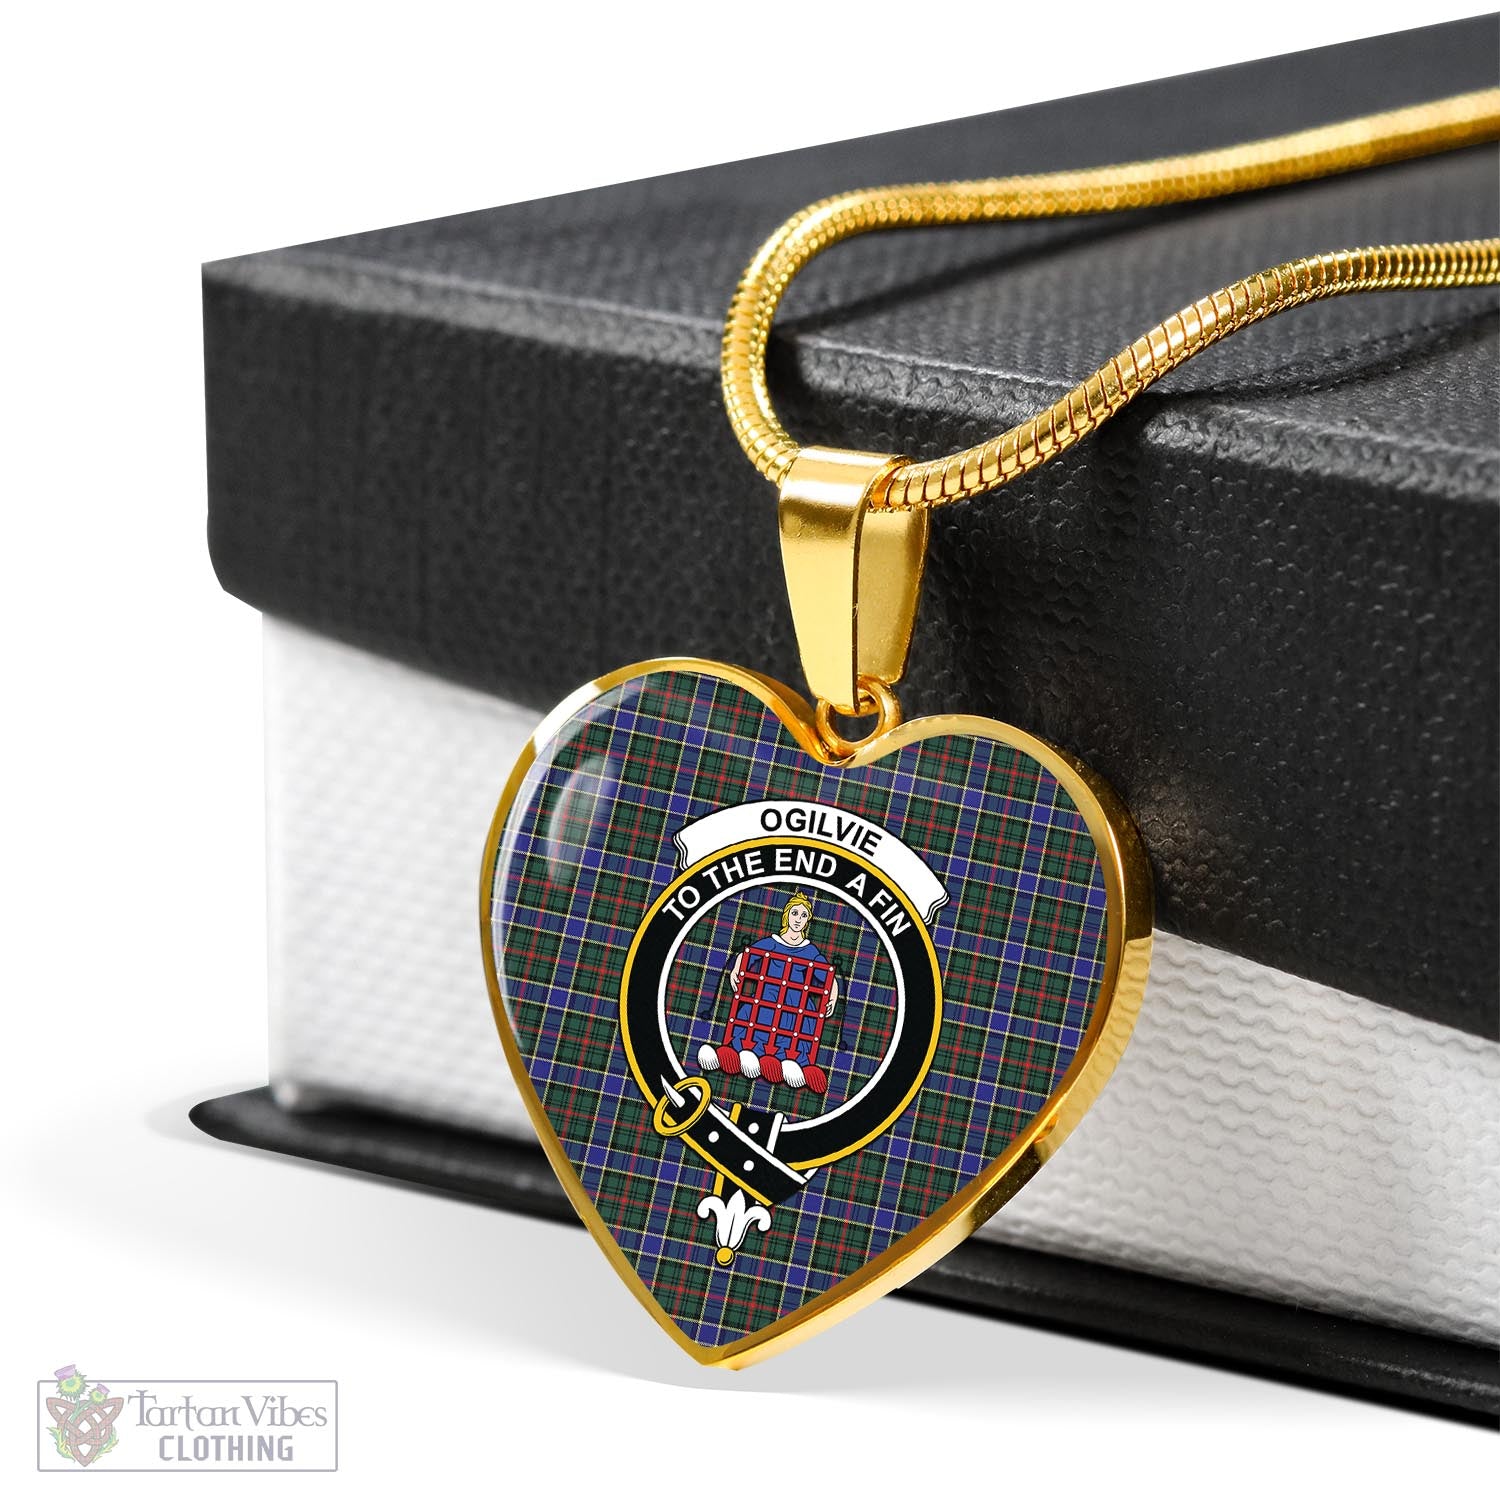 Tartan Vibes Clothing Ogilvie (Ogilvy) Hunting Modern Tartan Heart Necklace with Family Crest